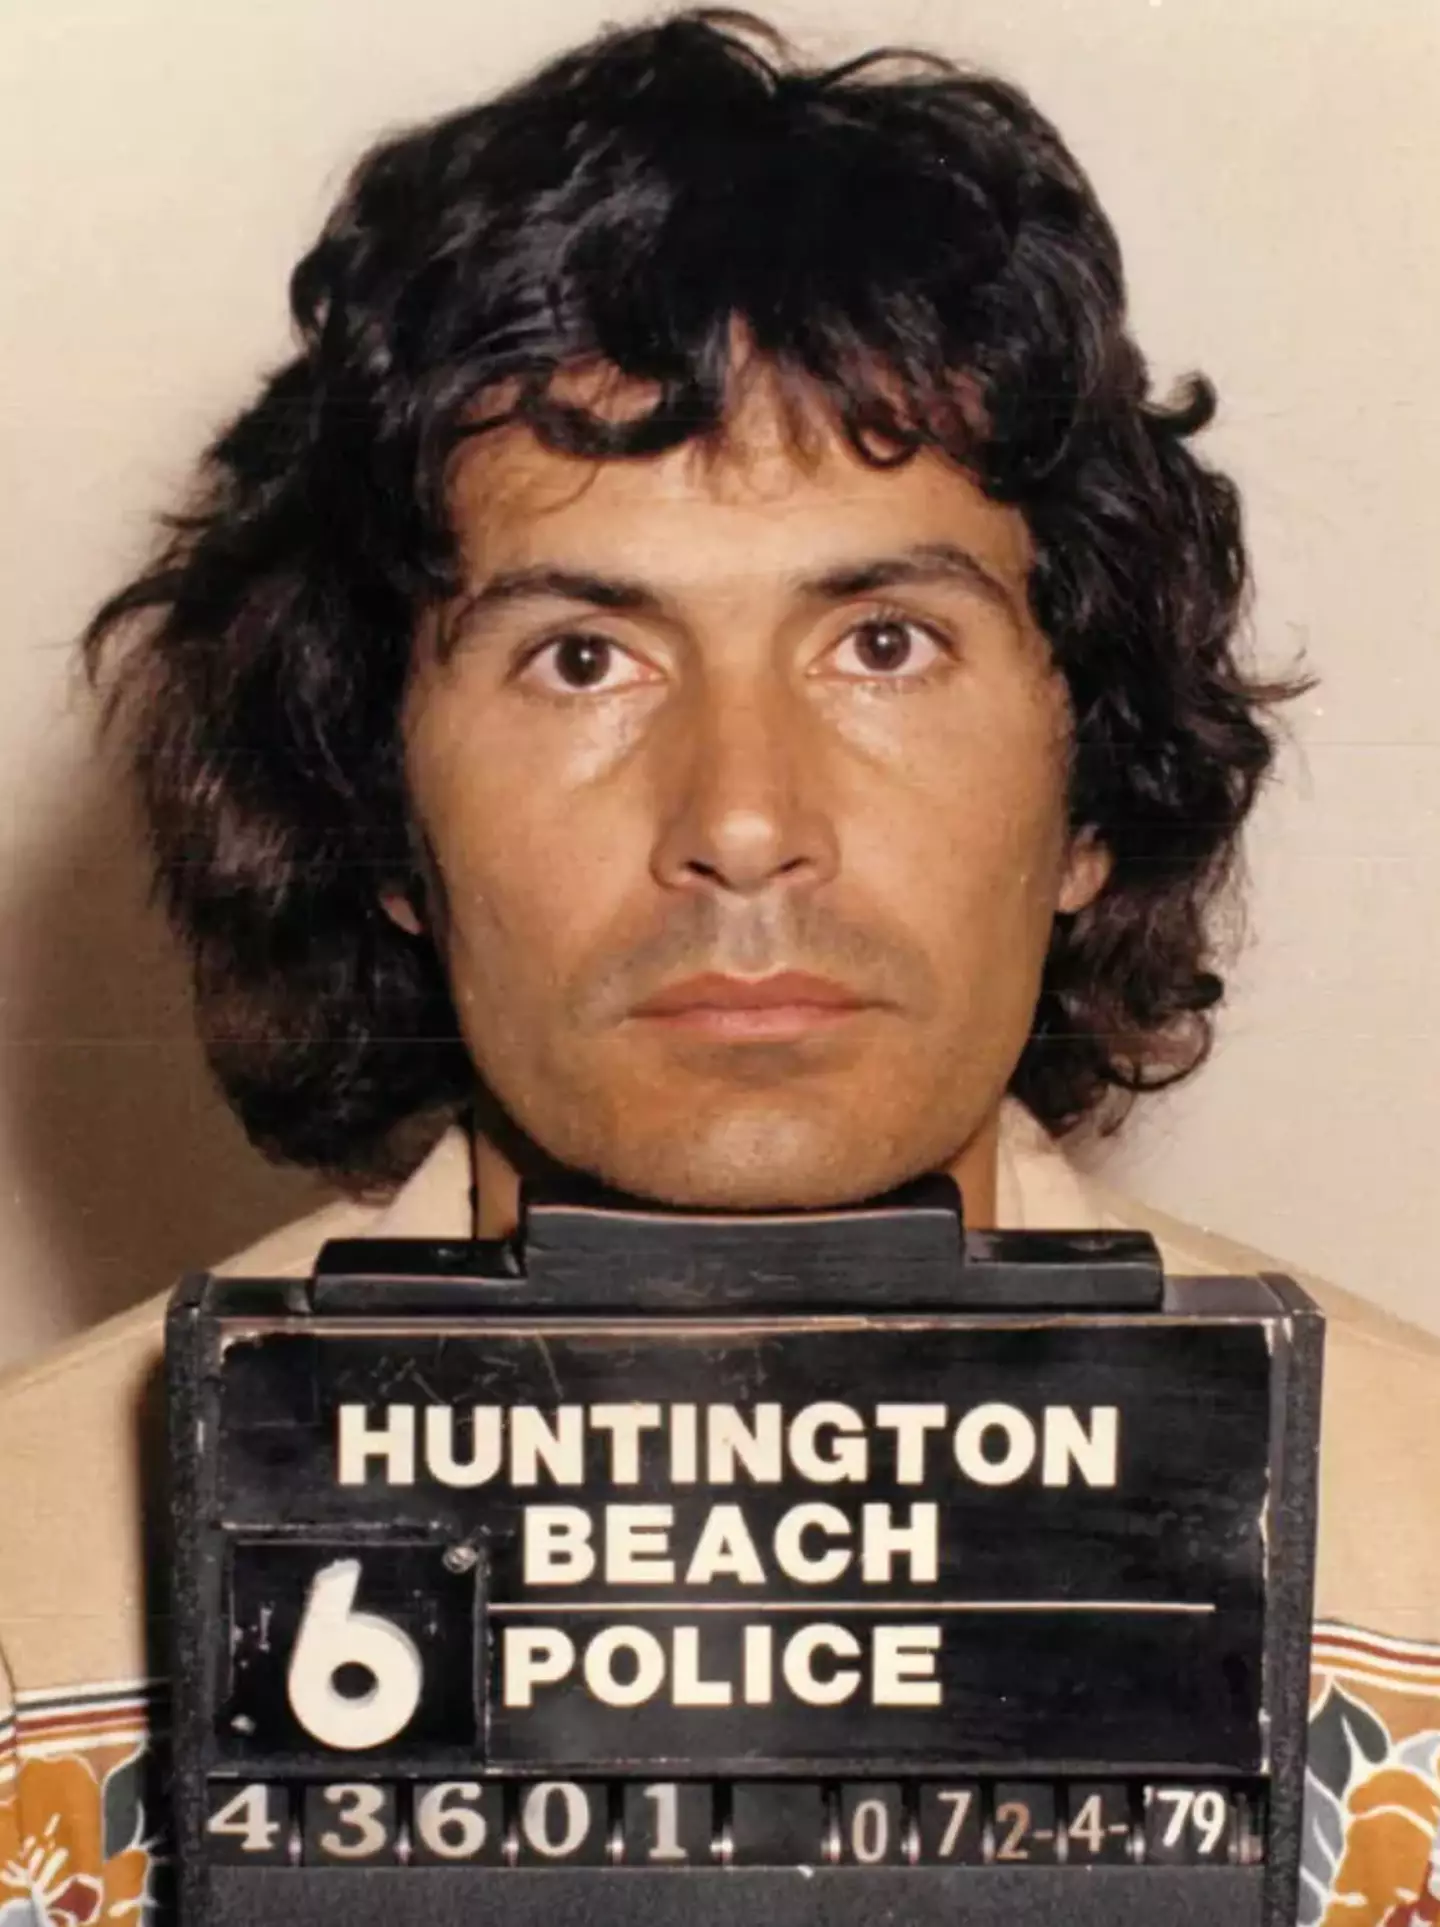 Alcala was arrested in 1979 (Huntington Beach Police) 